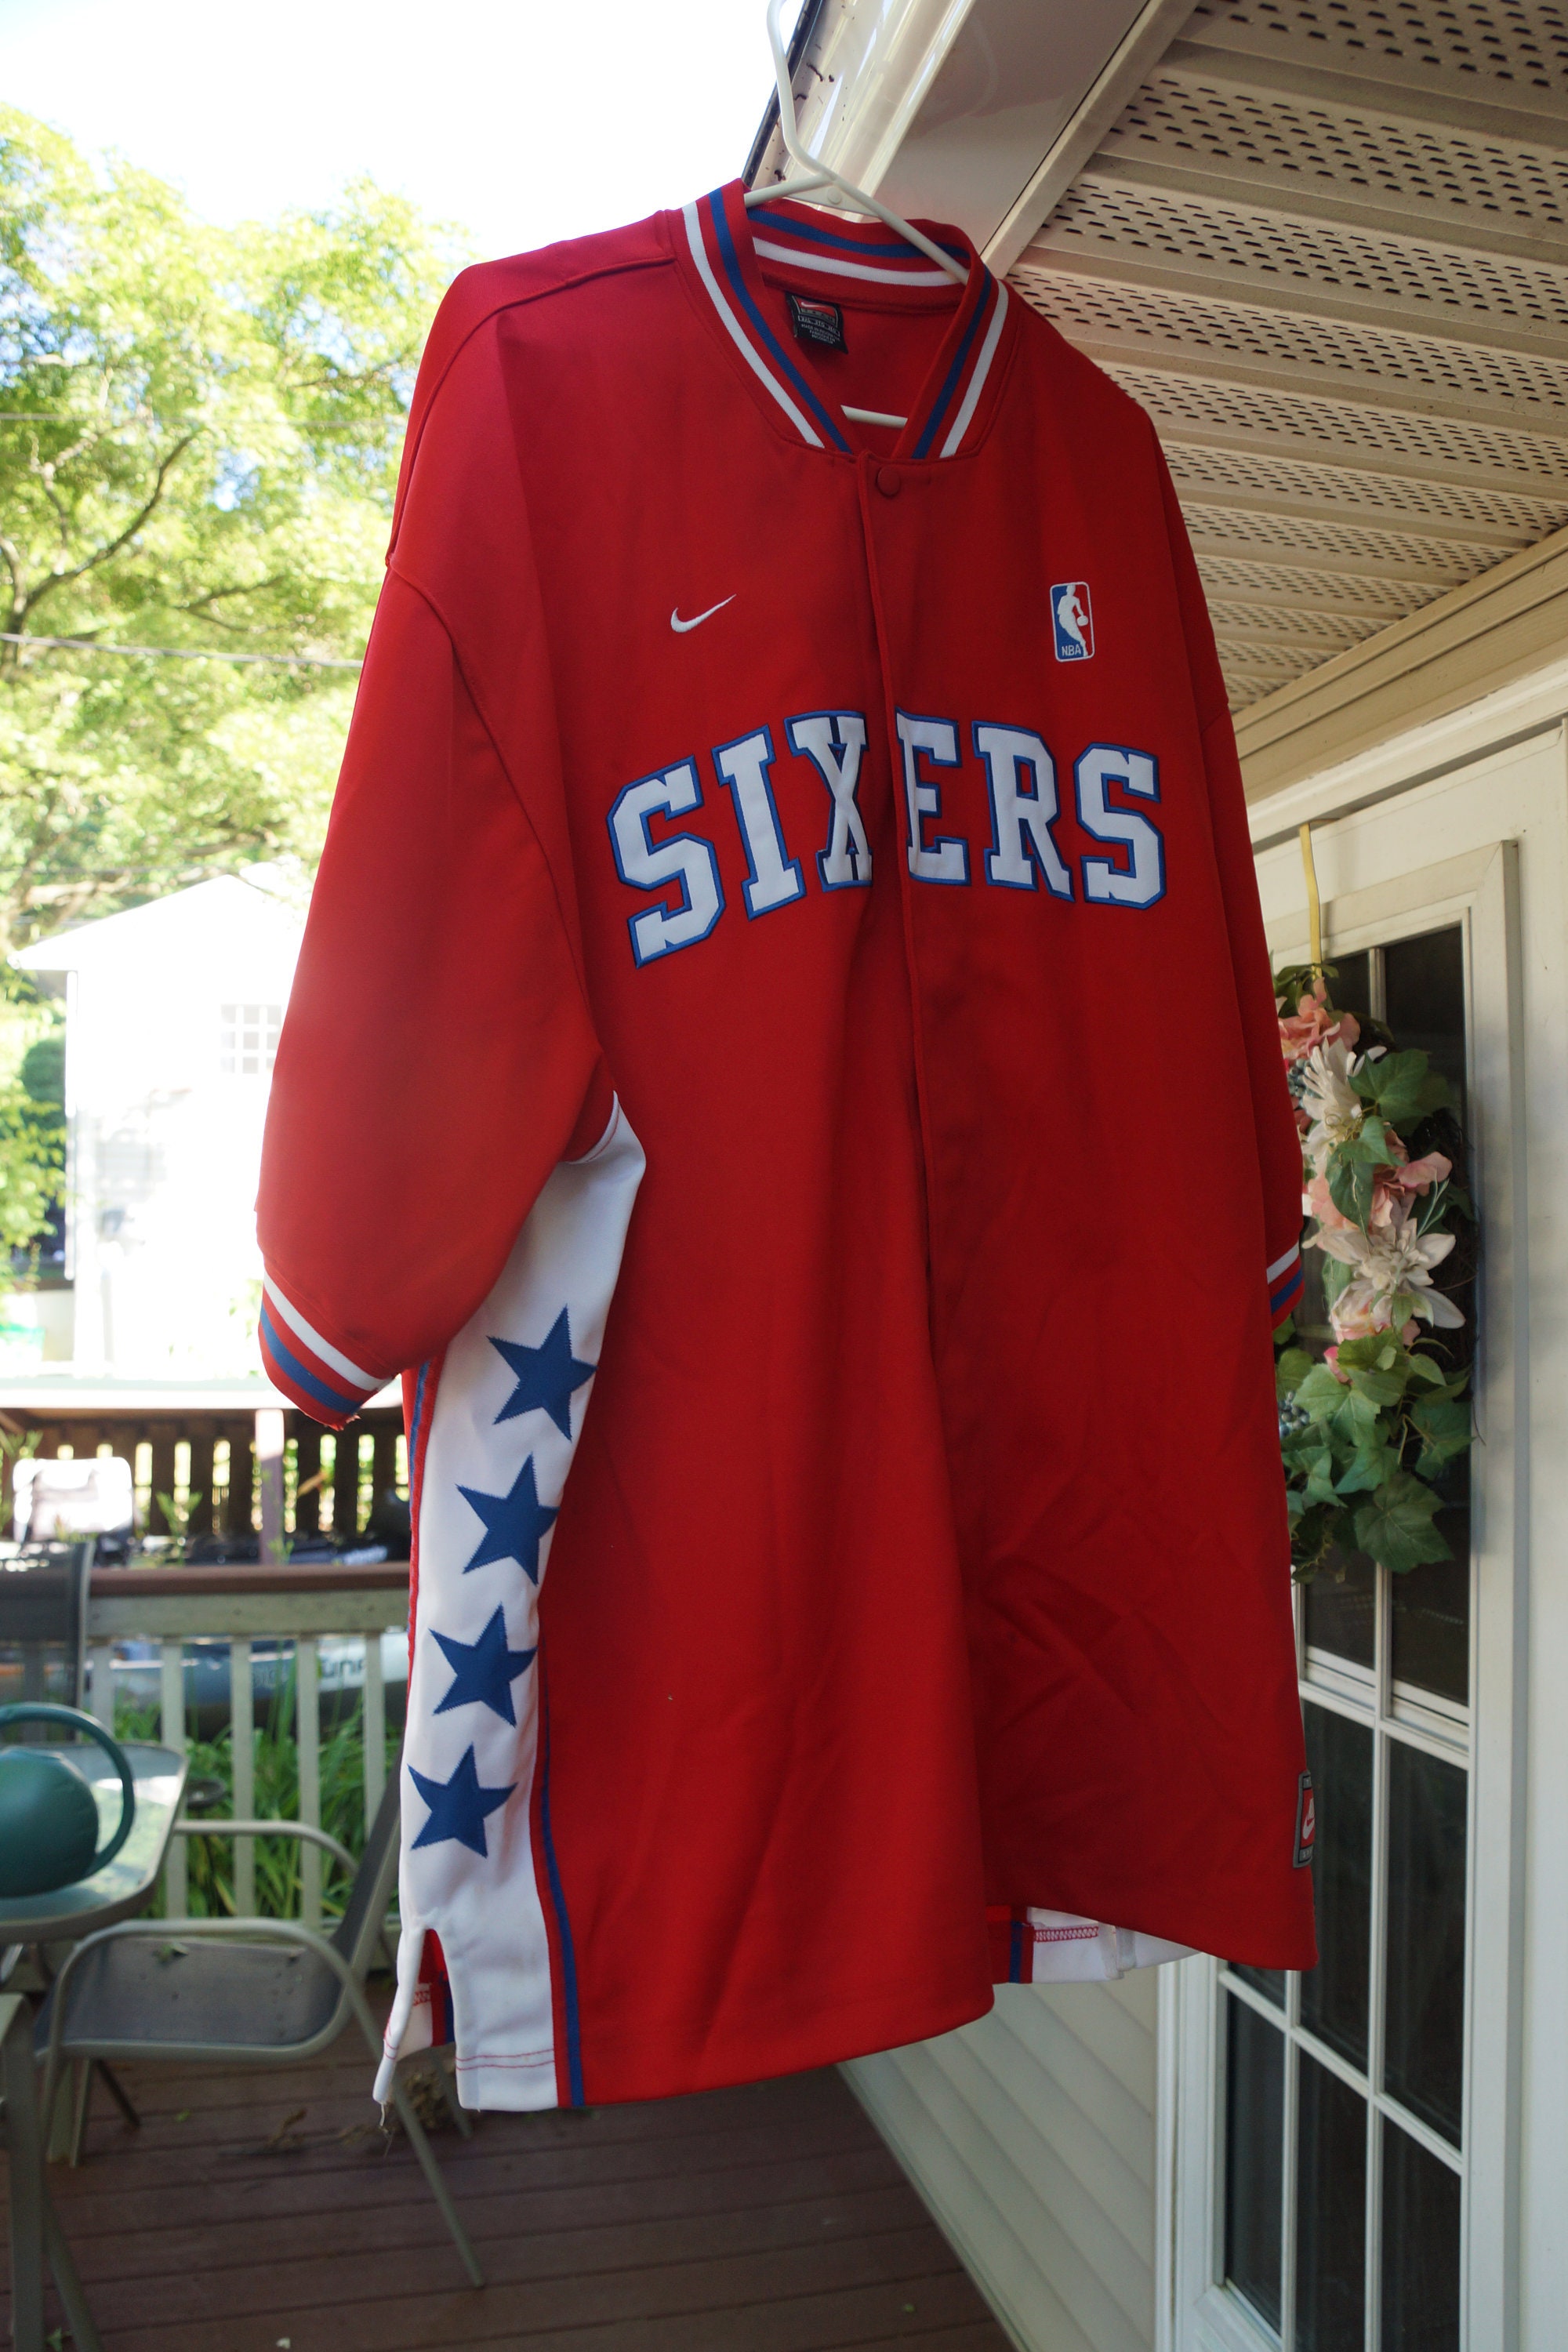 Retro Philadelphia Sixers 76ers Varsity Shirt - Trends Bedding